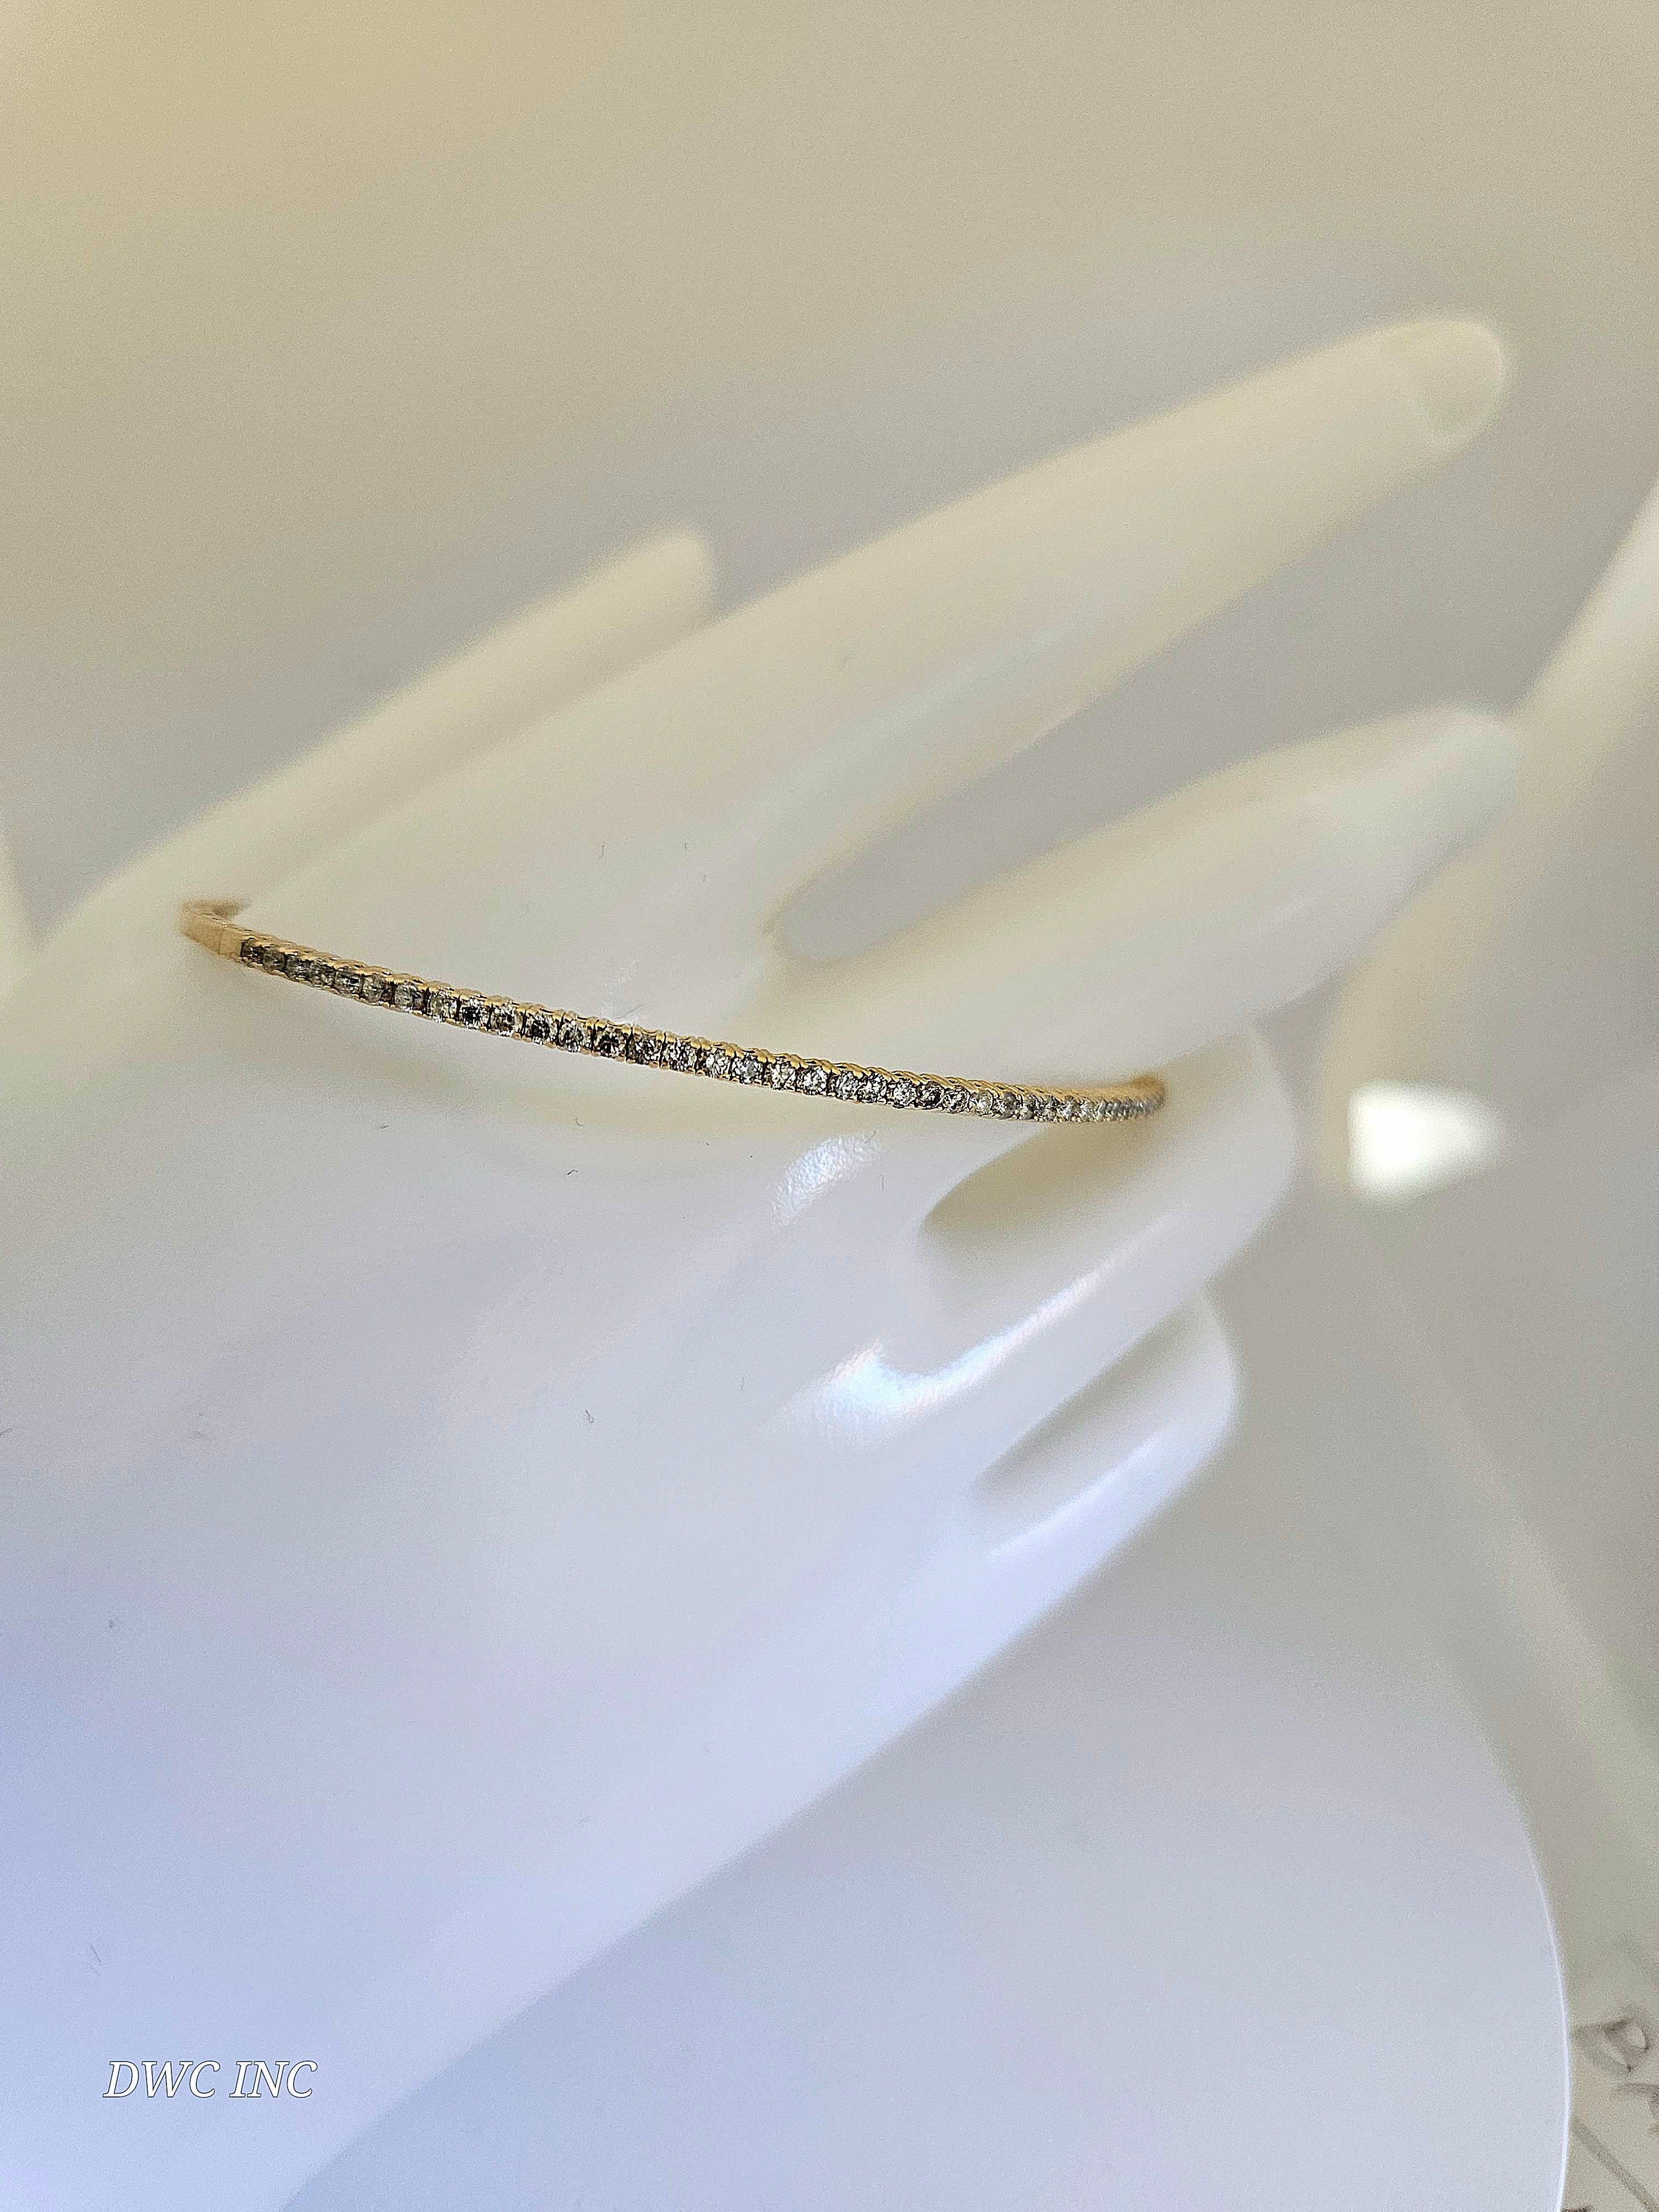 0.68 Carat Natural diamonds Mini Bangle bracelet round-brilliant cut  14k yellow gold. 
7 inch. 41pcs Average H-,I  1.7 mm wide. Very Shiny 5.29 grams.

*Free shipping within the U.S.*